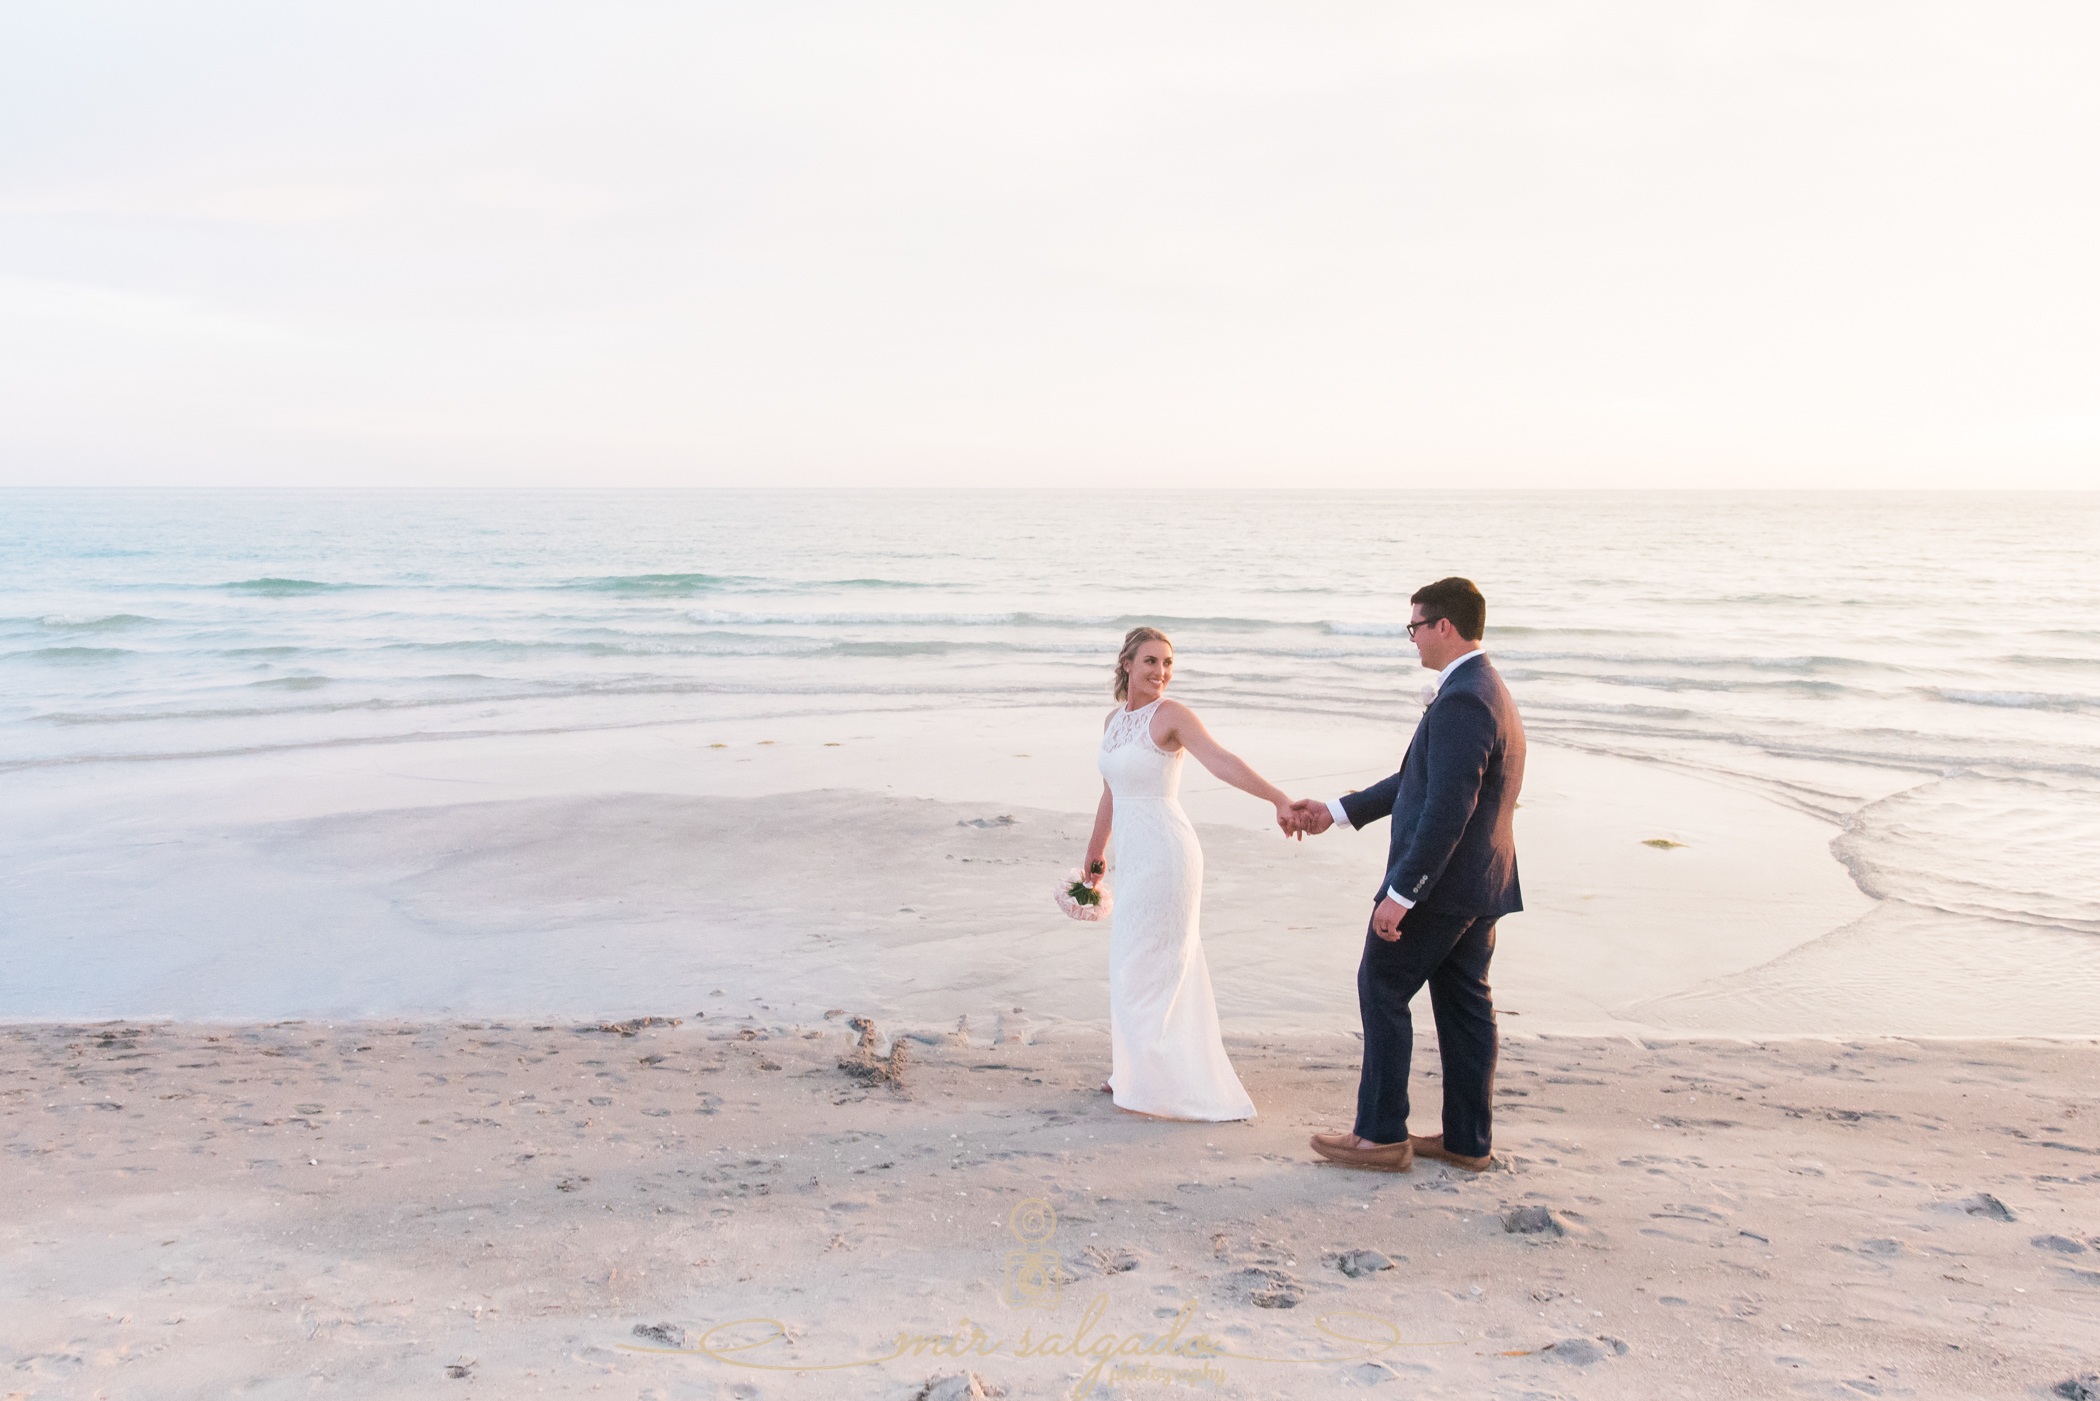 wedding-walk-on-the-beach, beach-sunset-wedding, beach-walk-resort, florida-beach-wedding, planning-a-beach-wedding